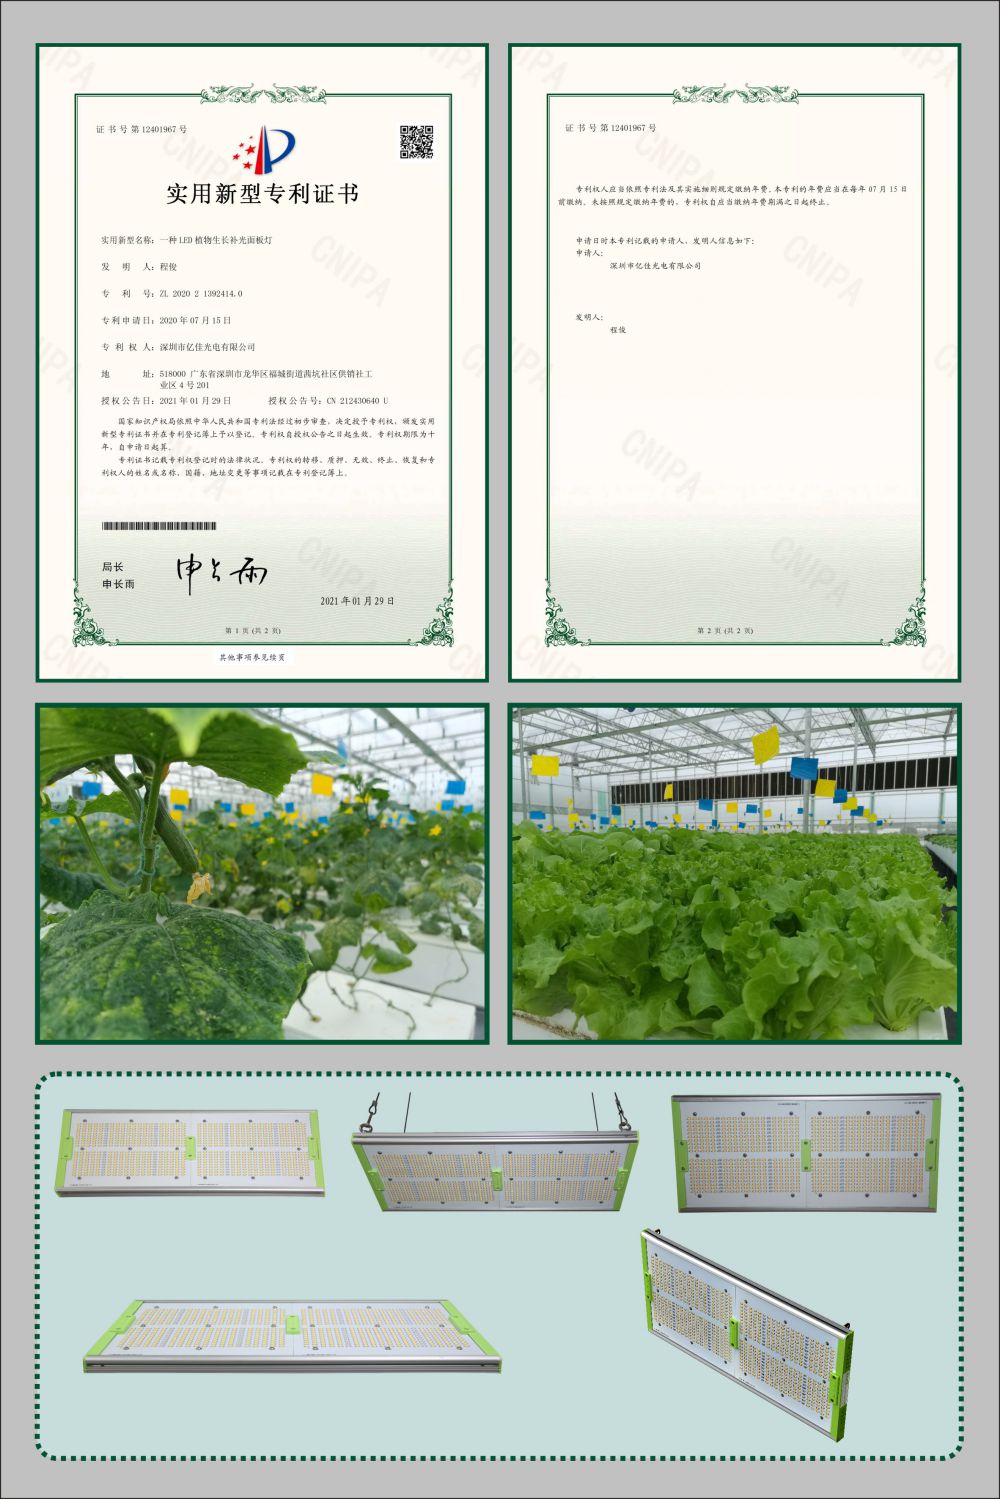 k8凯发植物生长面板灯实用新型专利